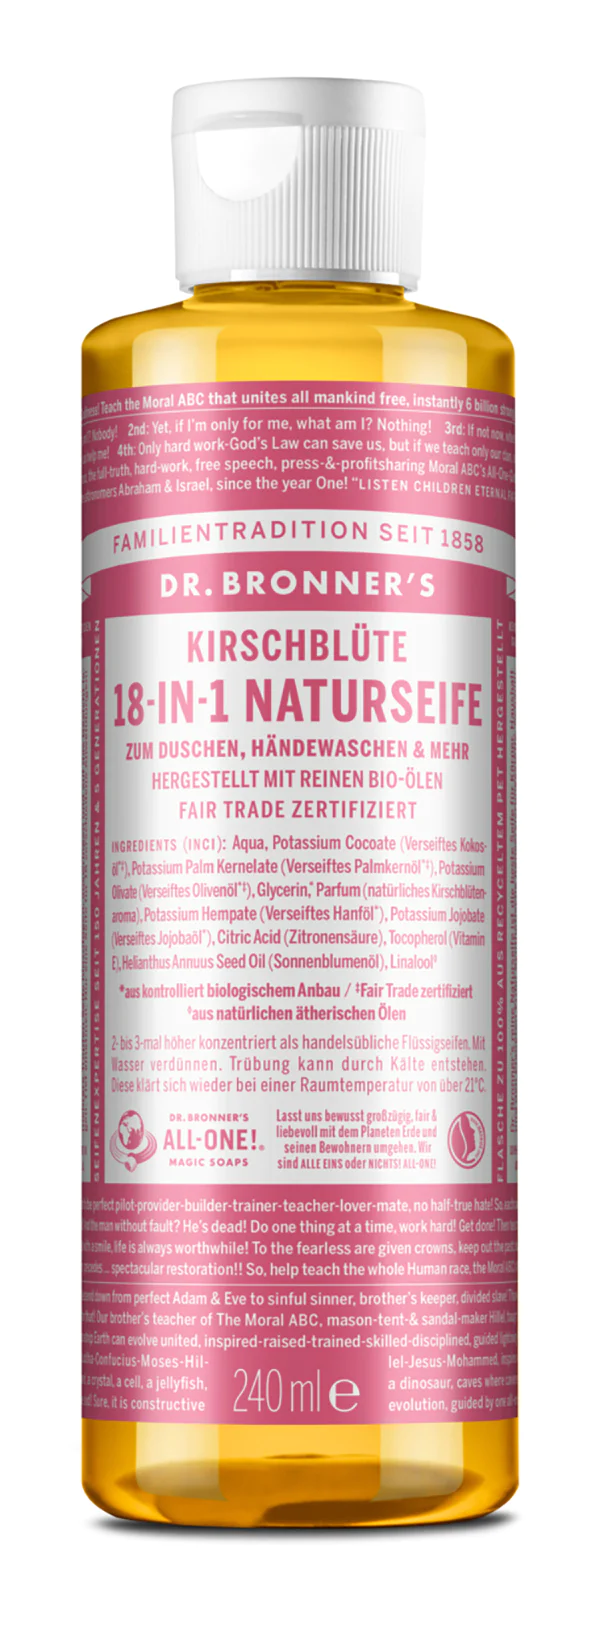 Dr. Bronner 18-IN-1 NATURSEIFE Kirschblüte 240ml